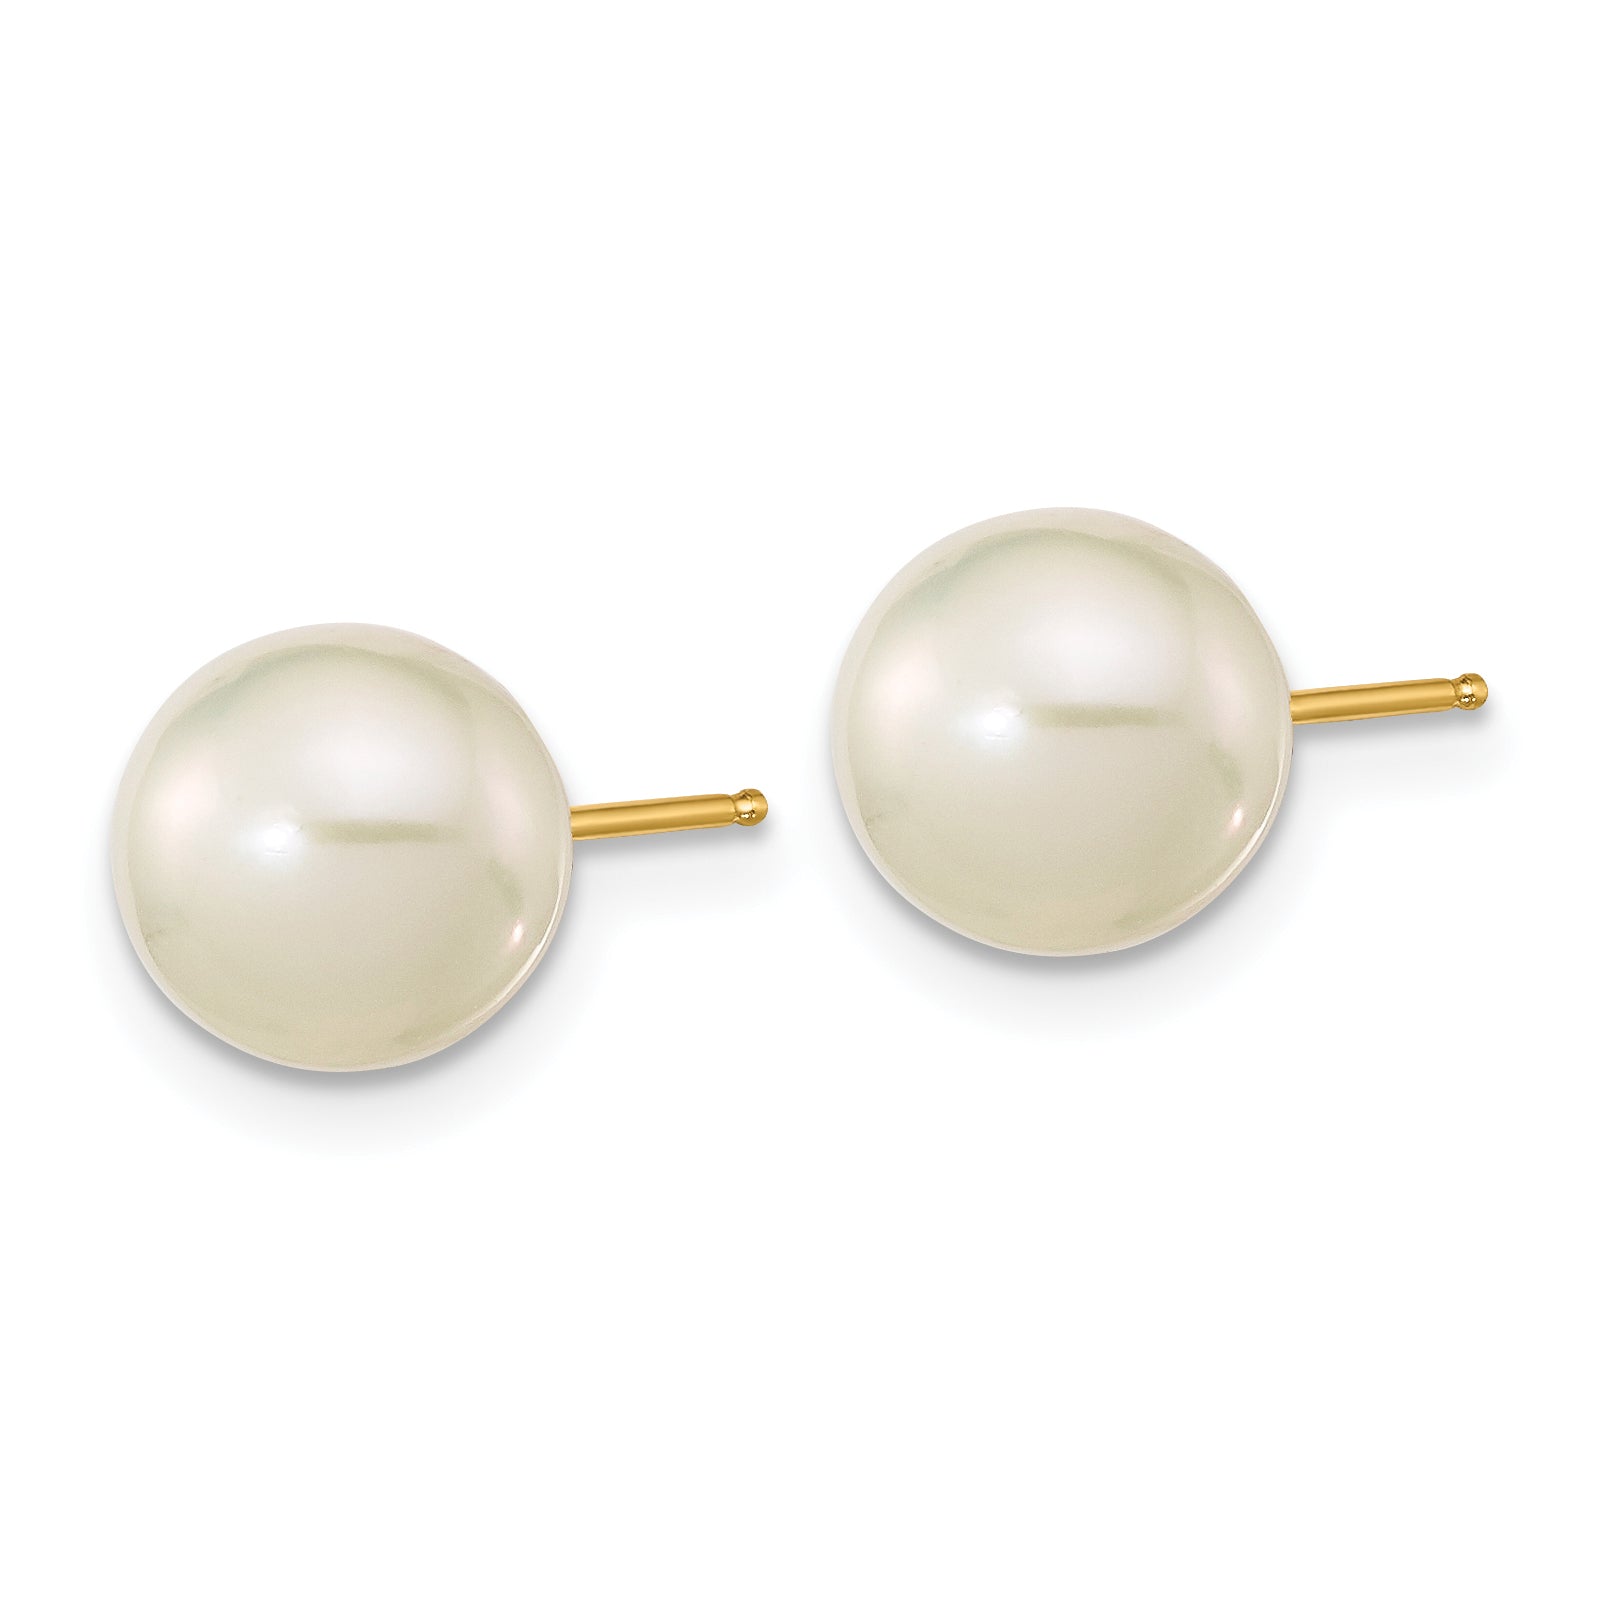 14K Madi K 7-8mm White Round Freshwater Cultured Pearl Stud Post Earrings